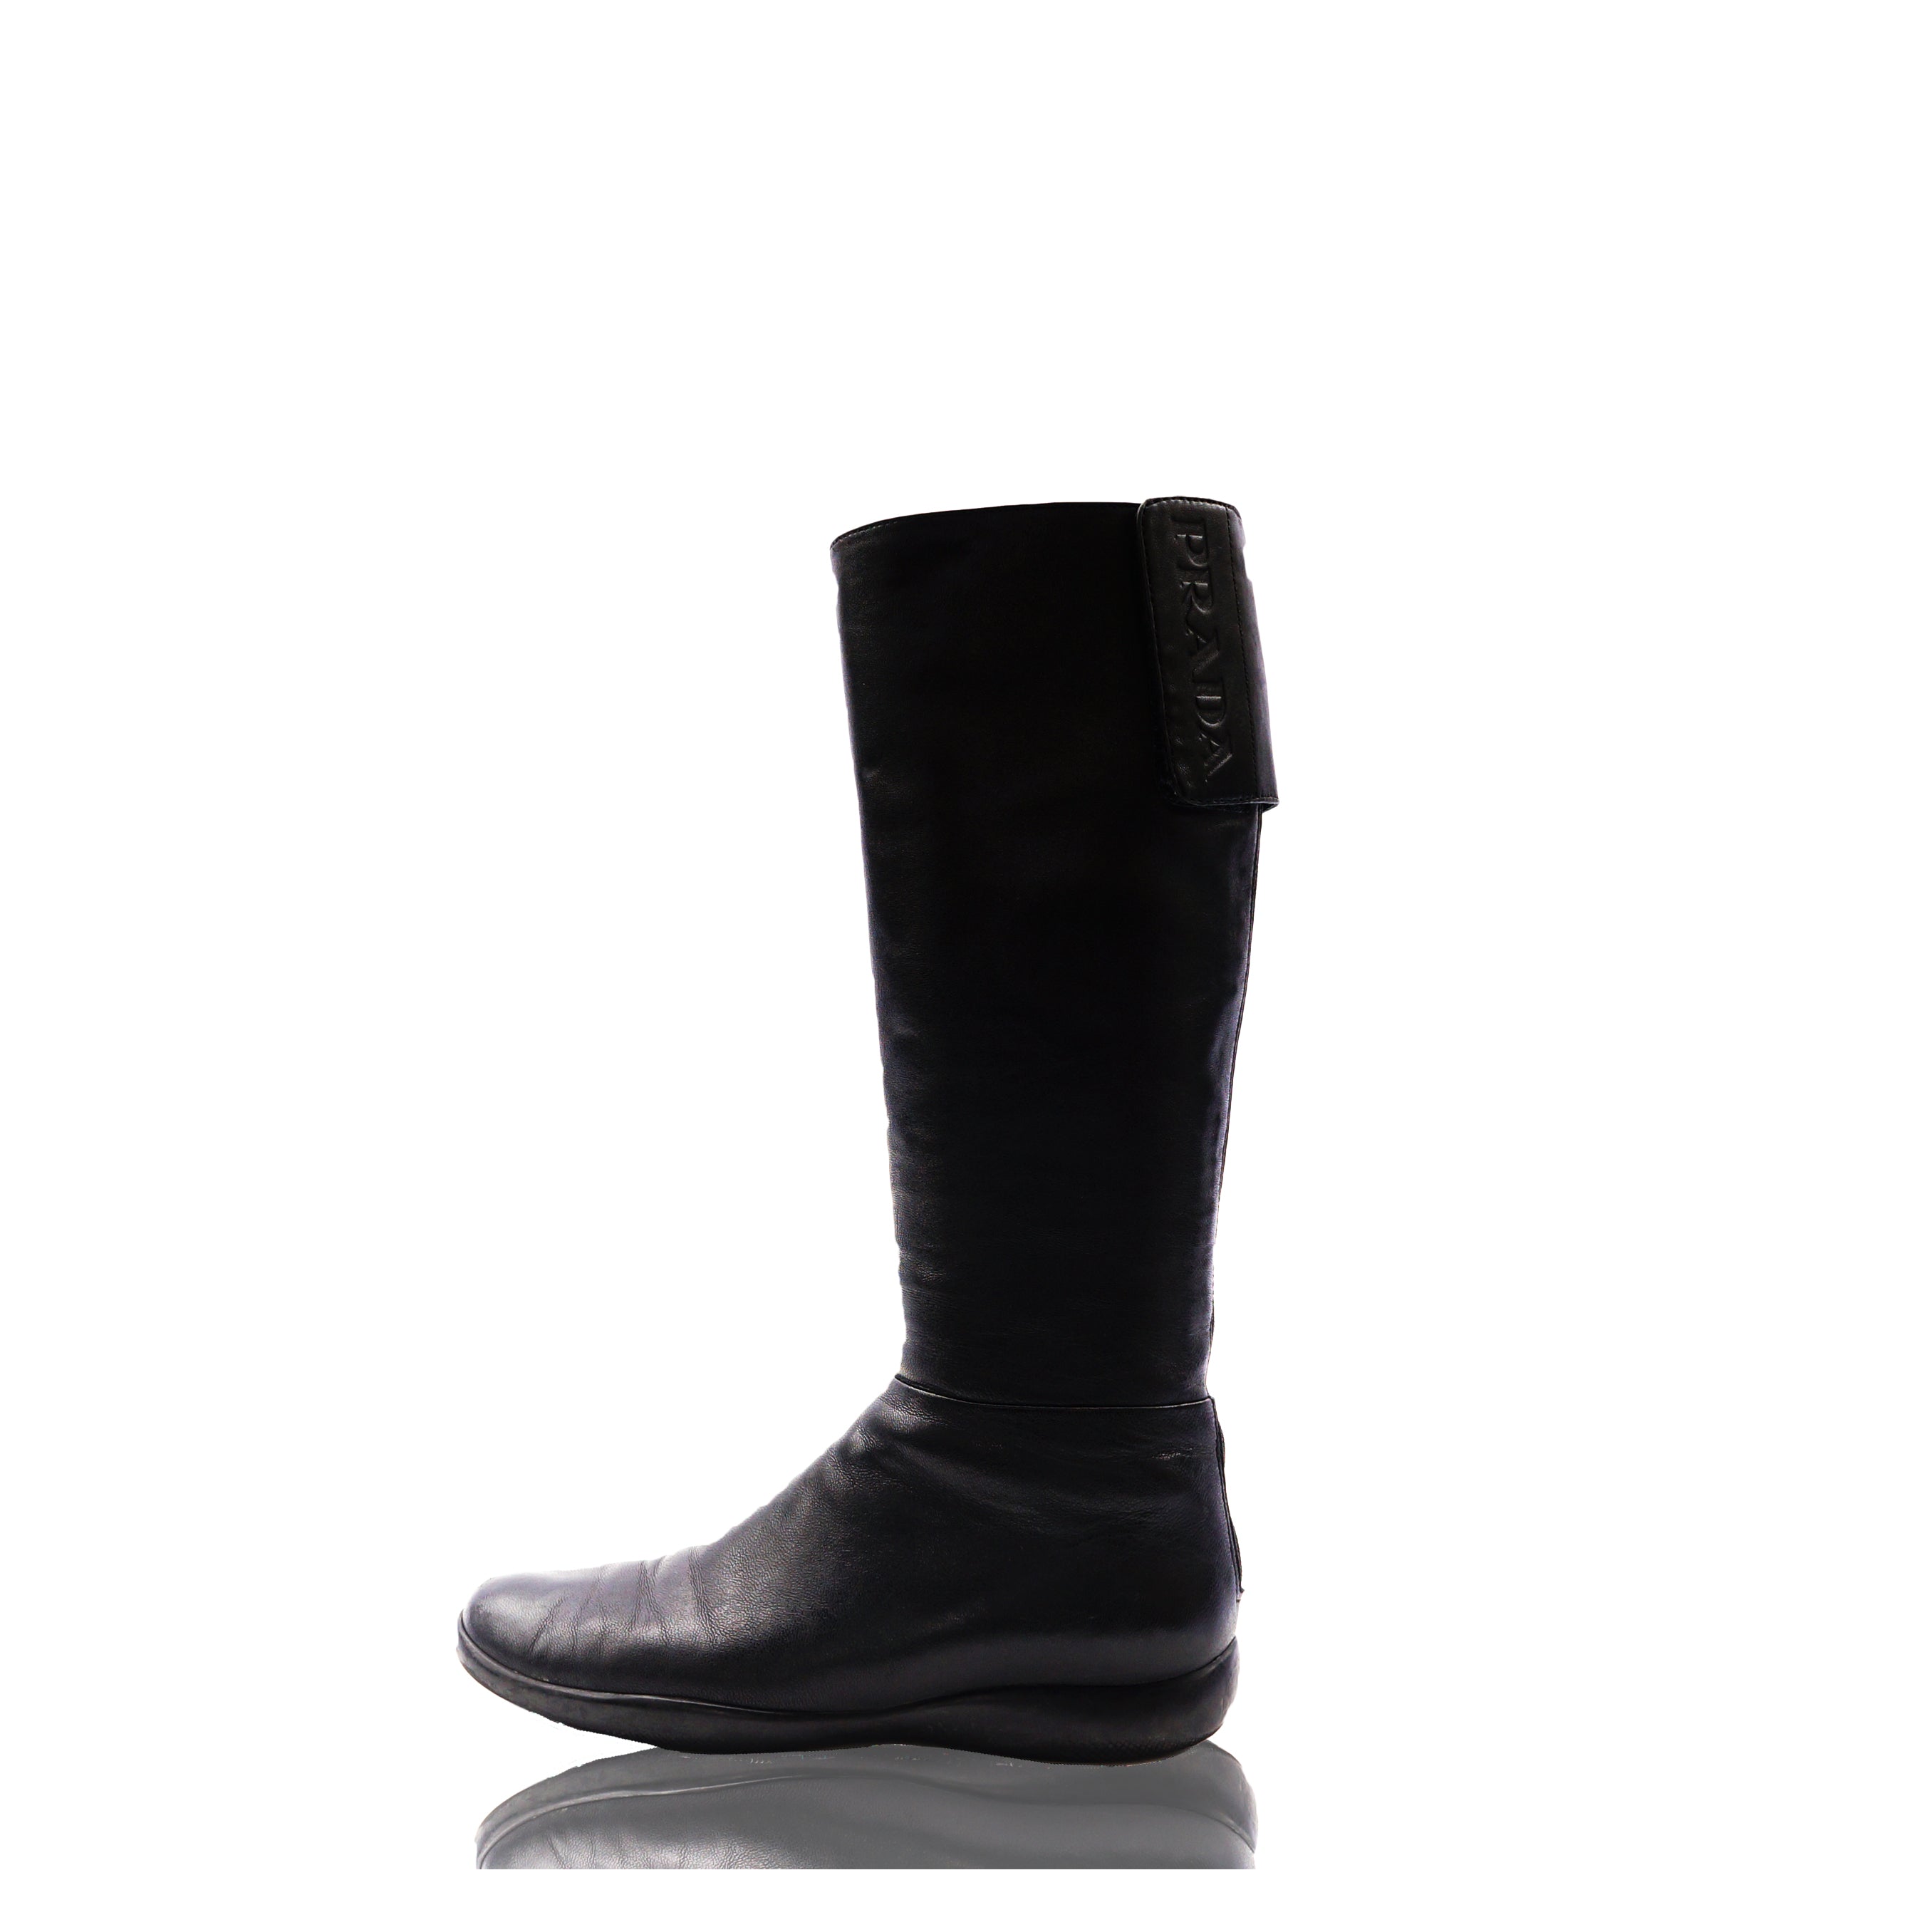 Prada Sport Rubber Rain Boots - Black Boots, Shoes - WPR121492